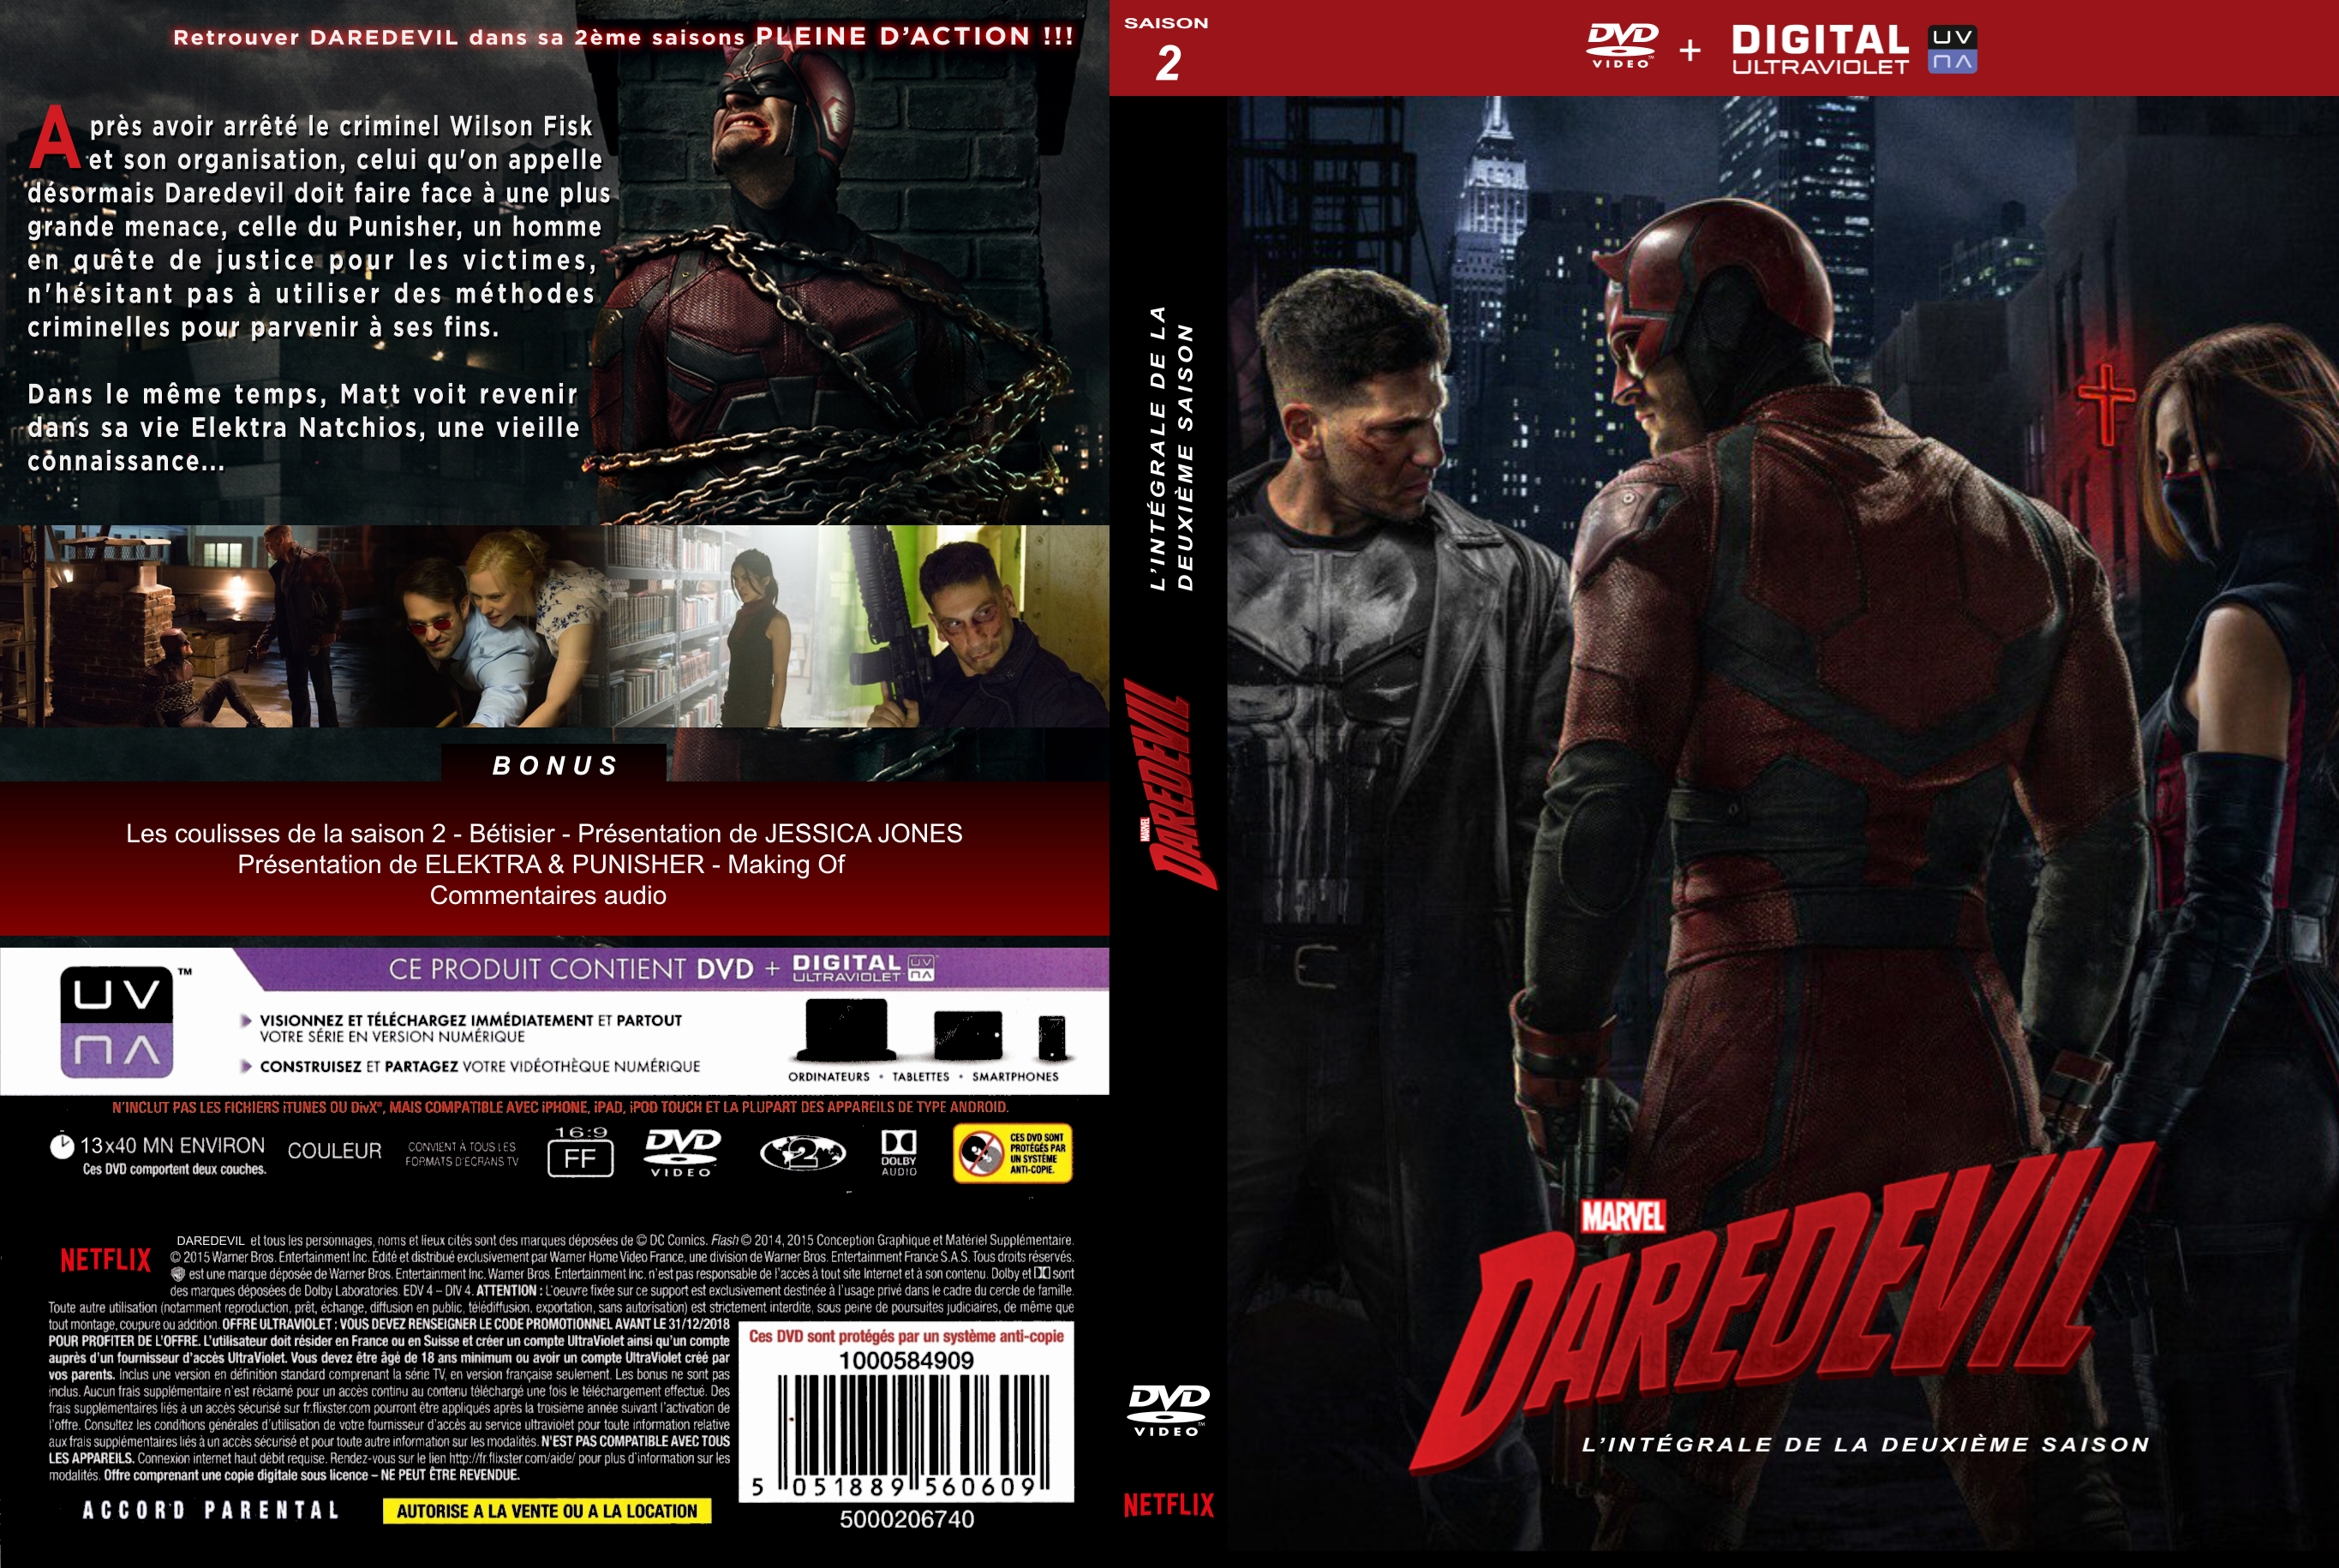 Jaquette DVD Daredevil Saison 2 custom